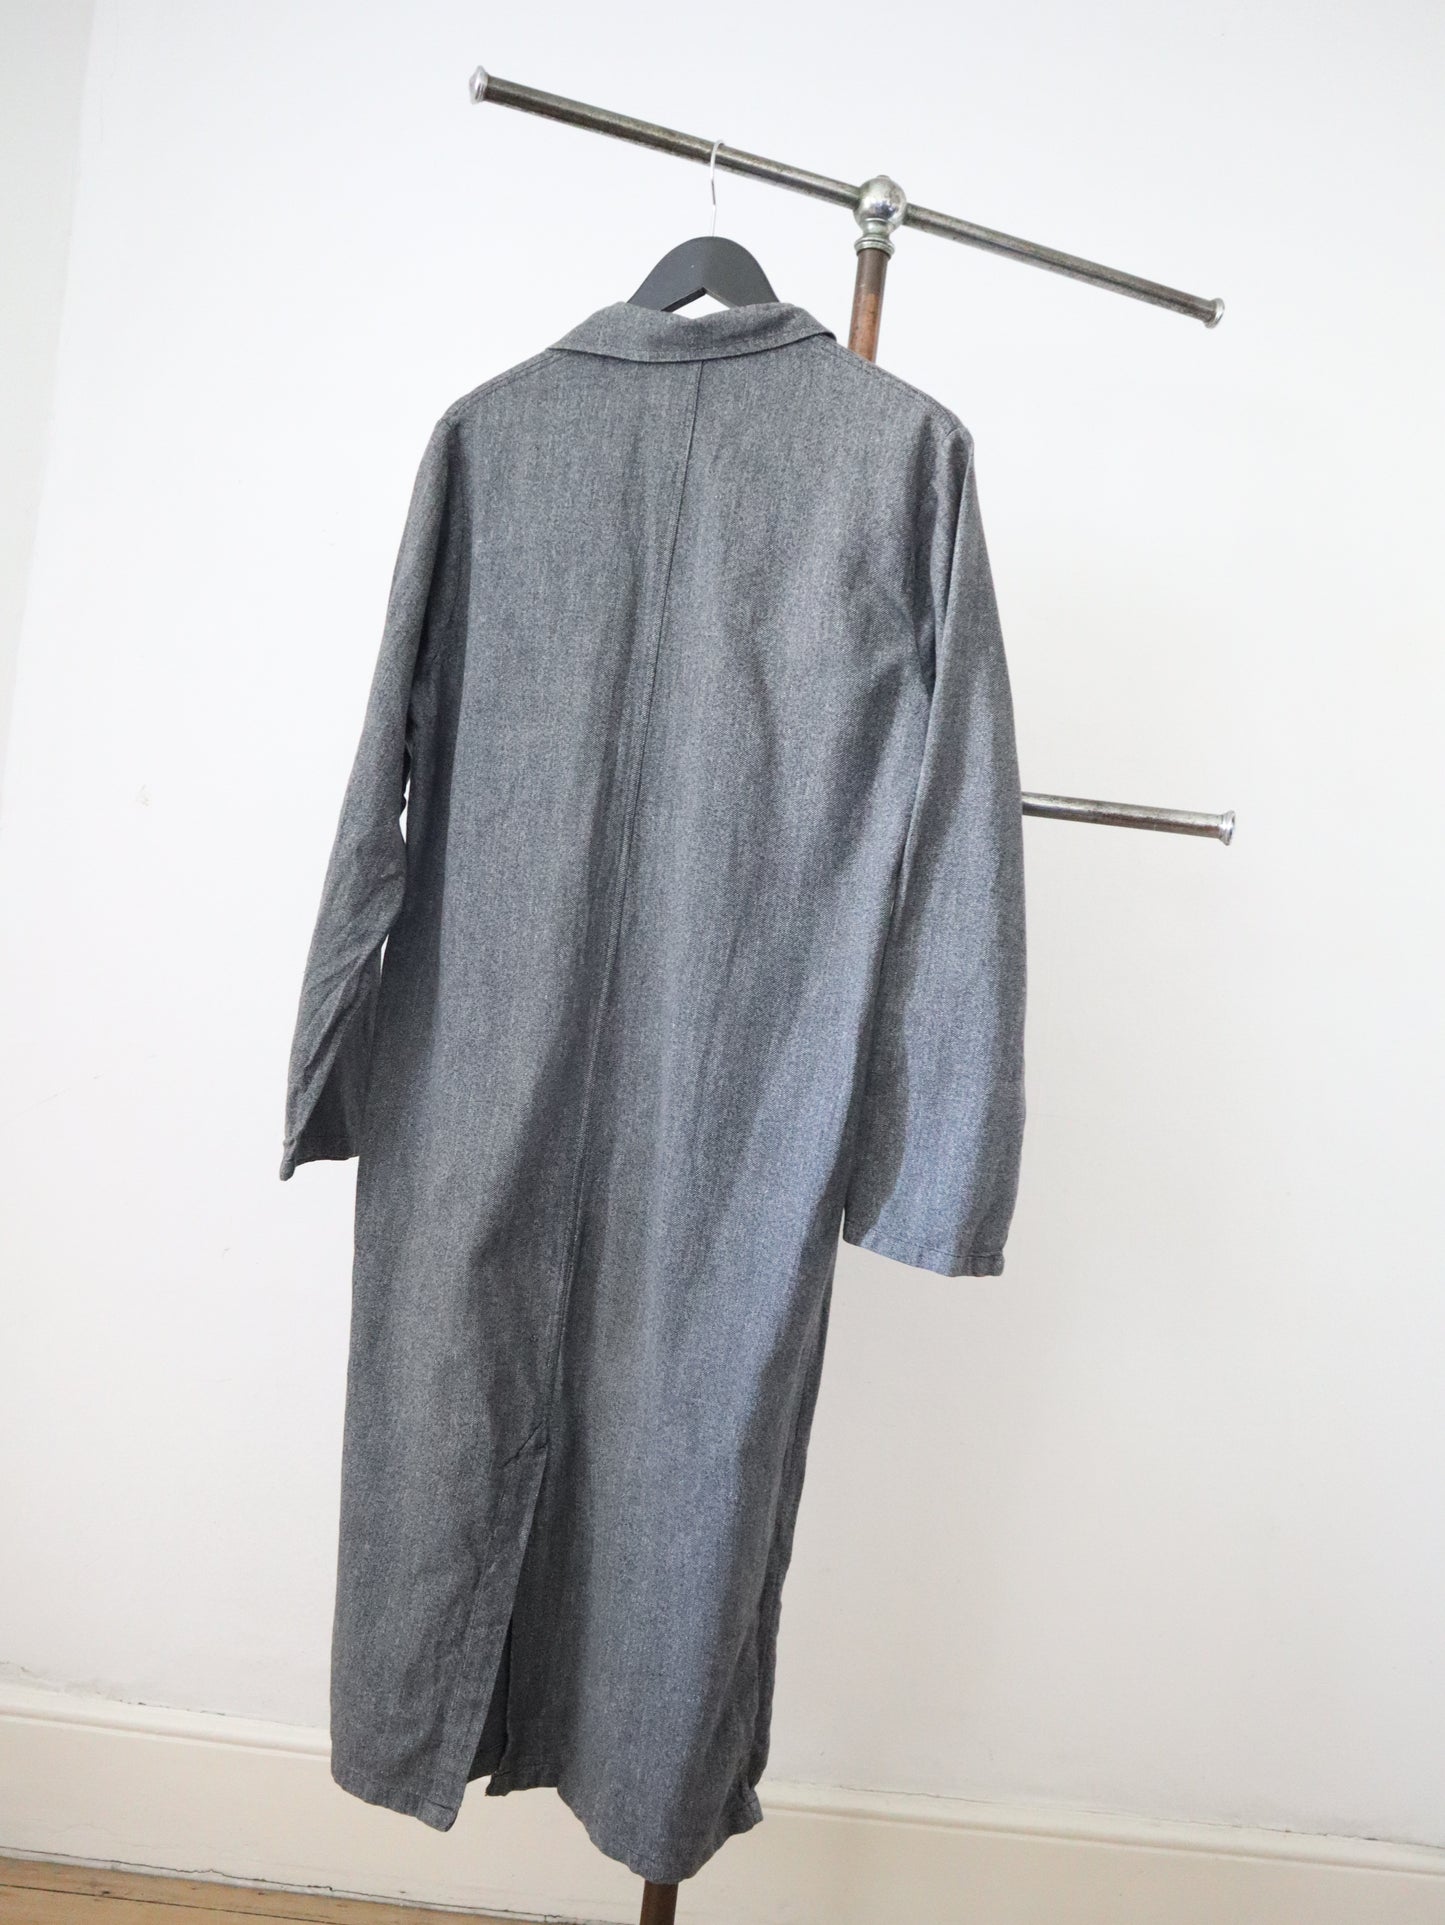 1940s French Grey Workwear Duster Jacket Coat Cotton Chore